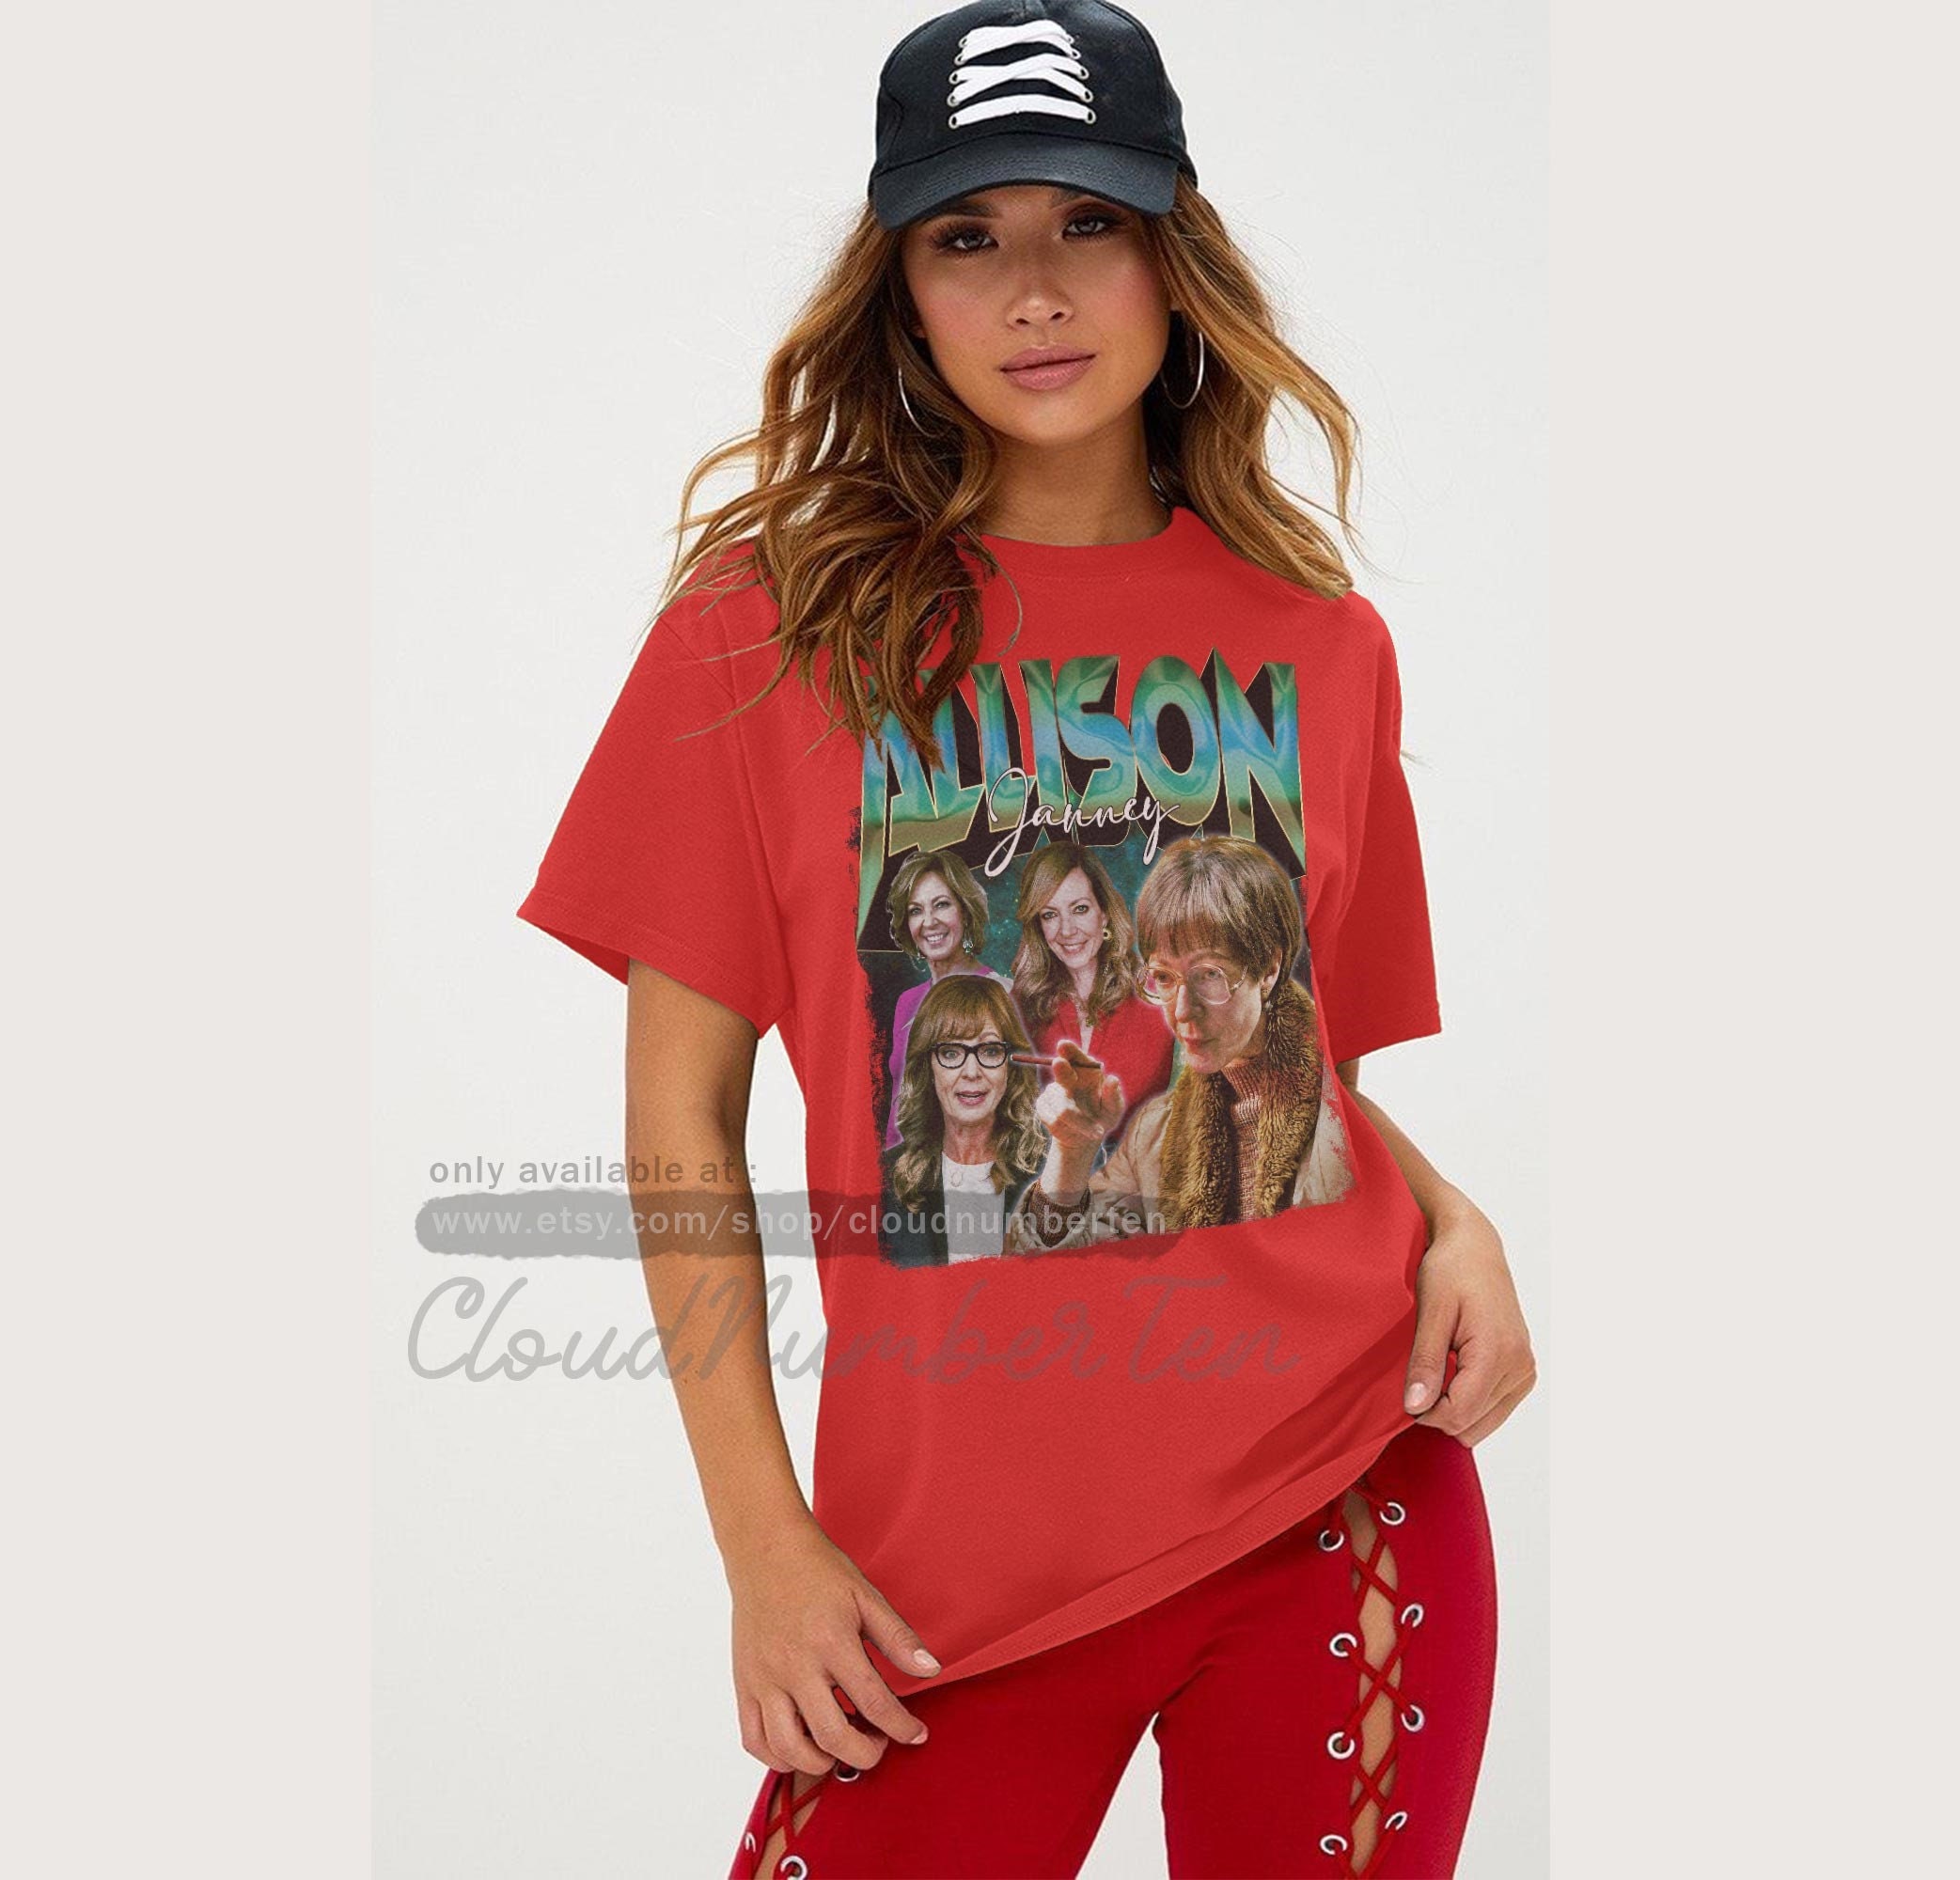 Allison Janney Shirt Retro 90s Poster Tee Vintage Style - Etsy